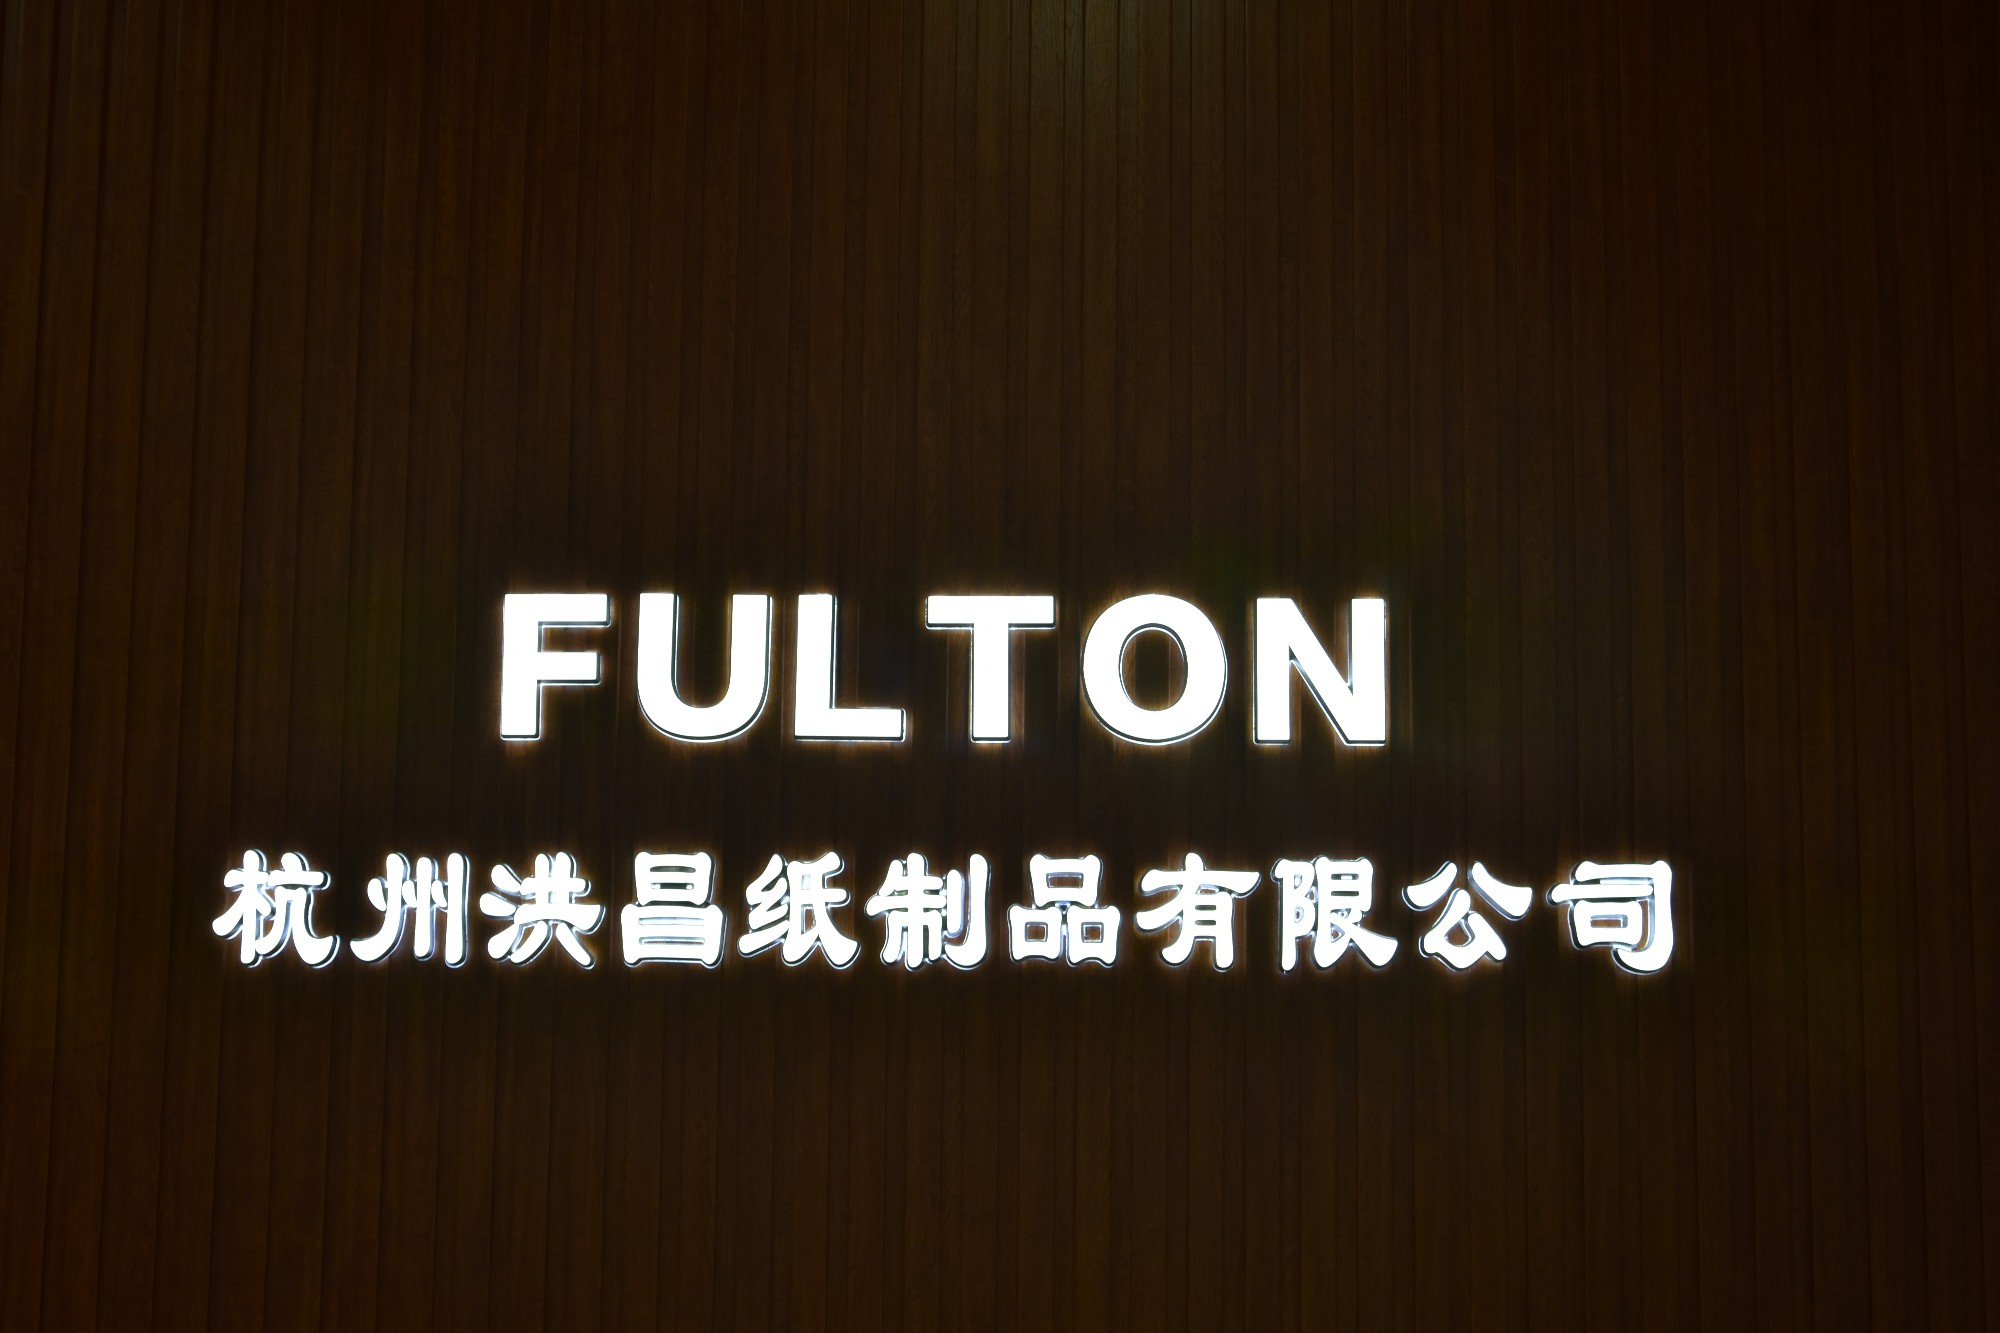 Fulton factory